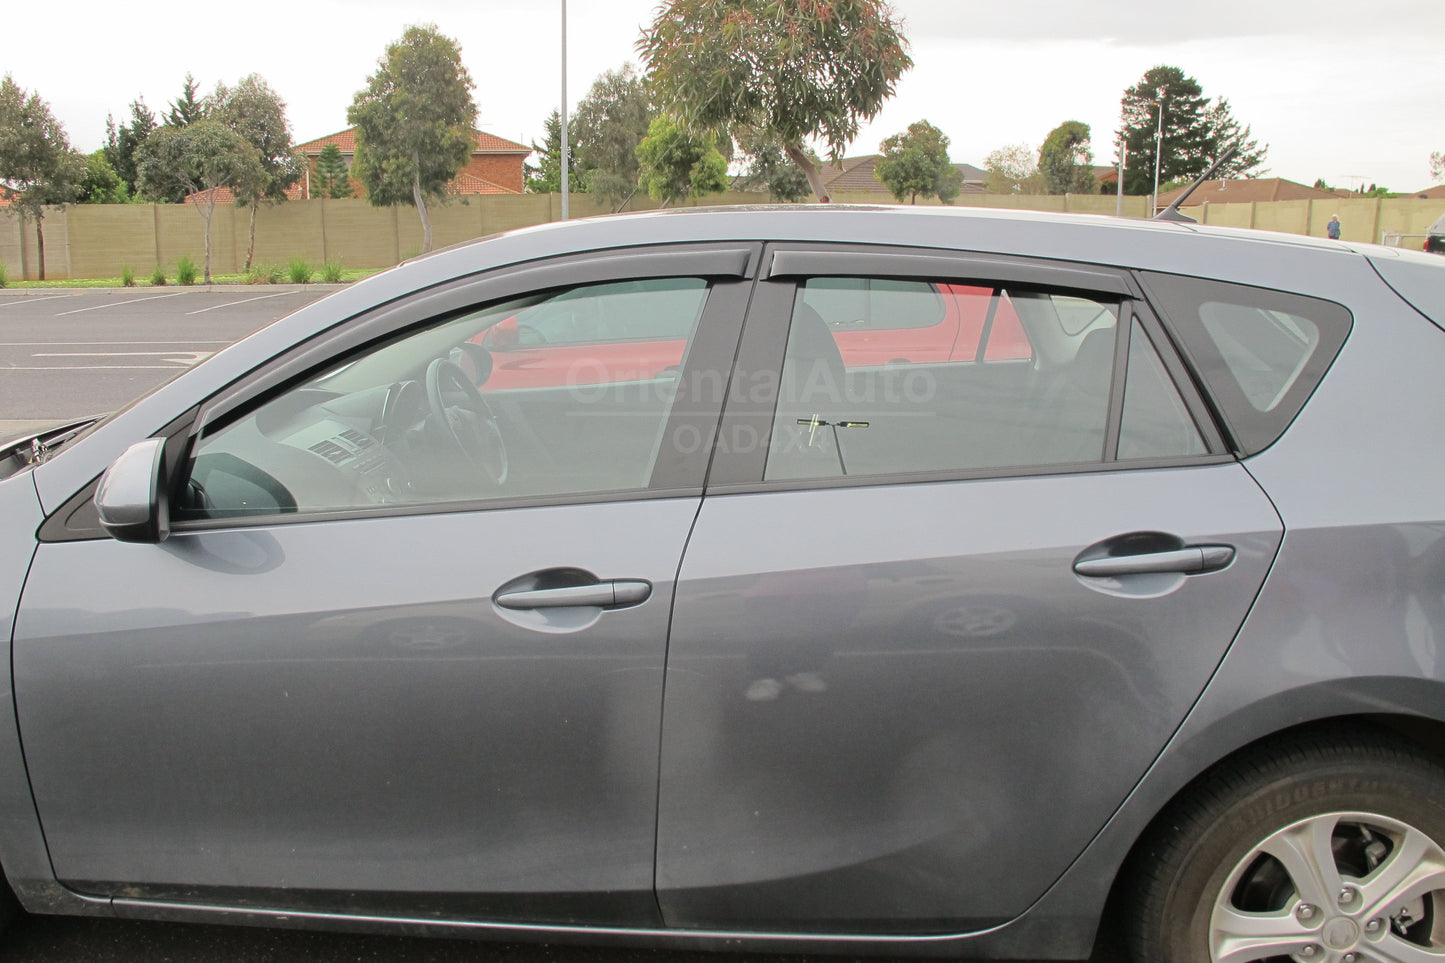 Premium Weathershields For Mazda 3 BL Series Hatch 5D 2009-2013 Weather Shields Window Visor